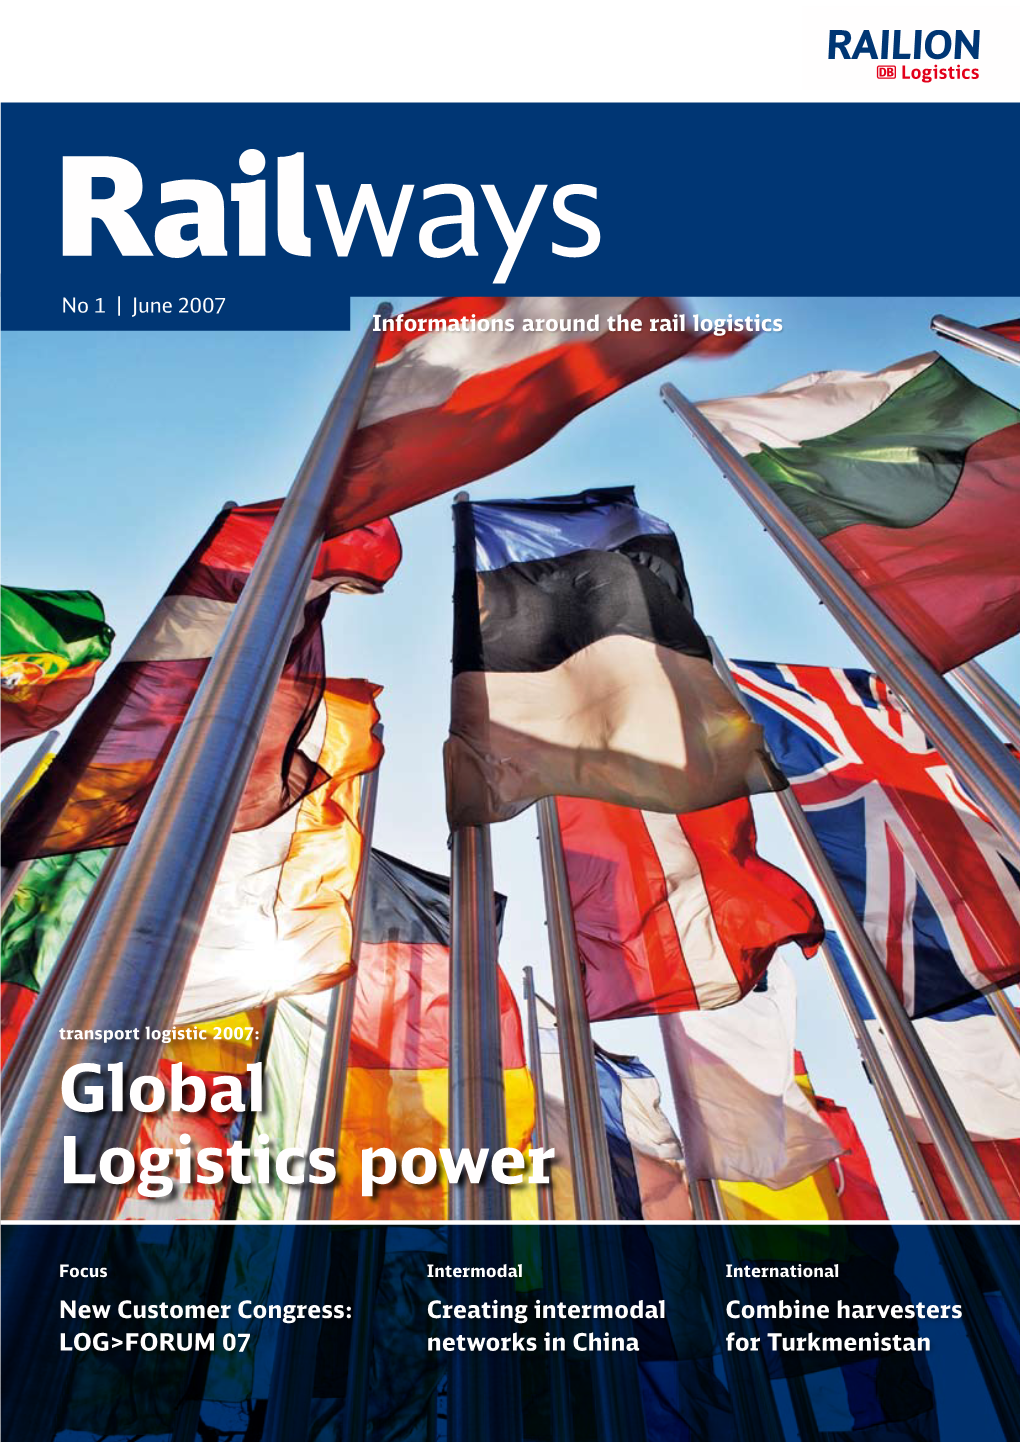 Global Logistics Power